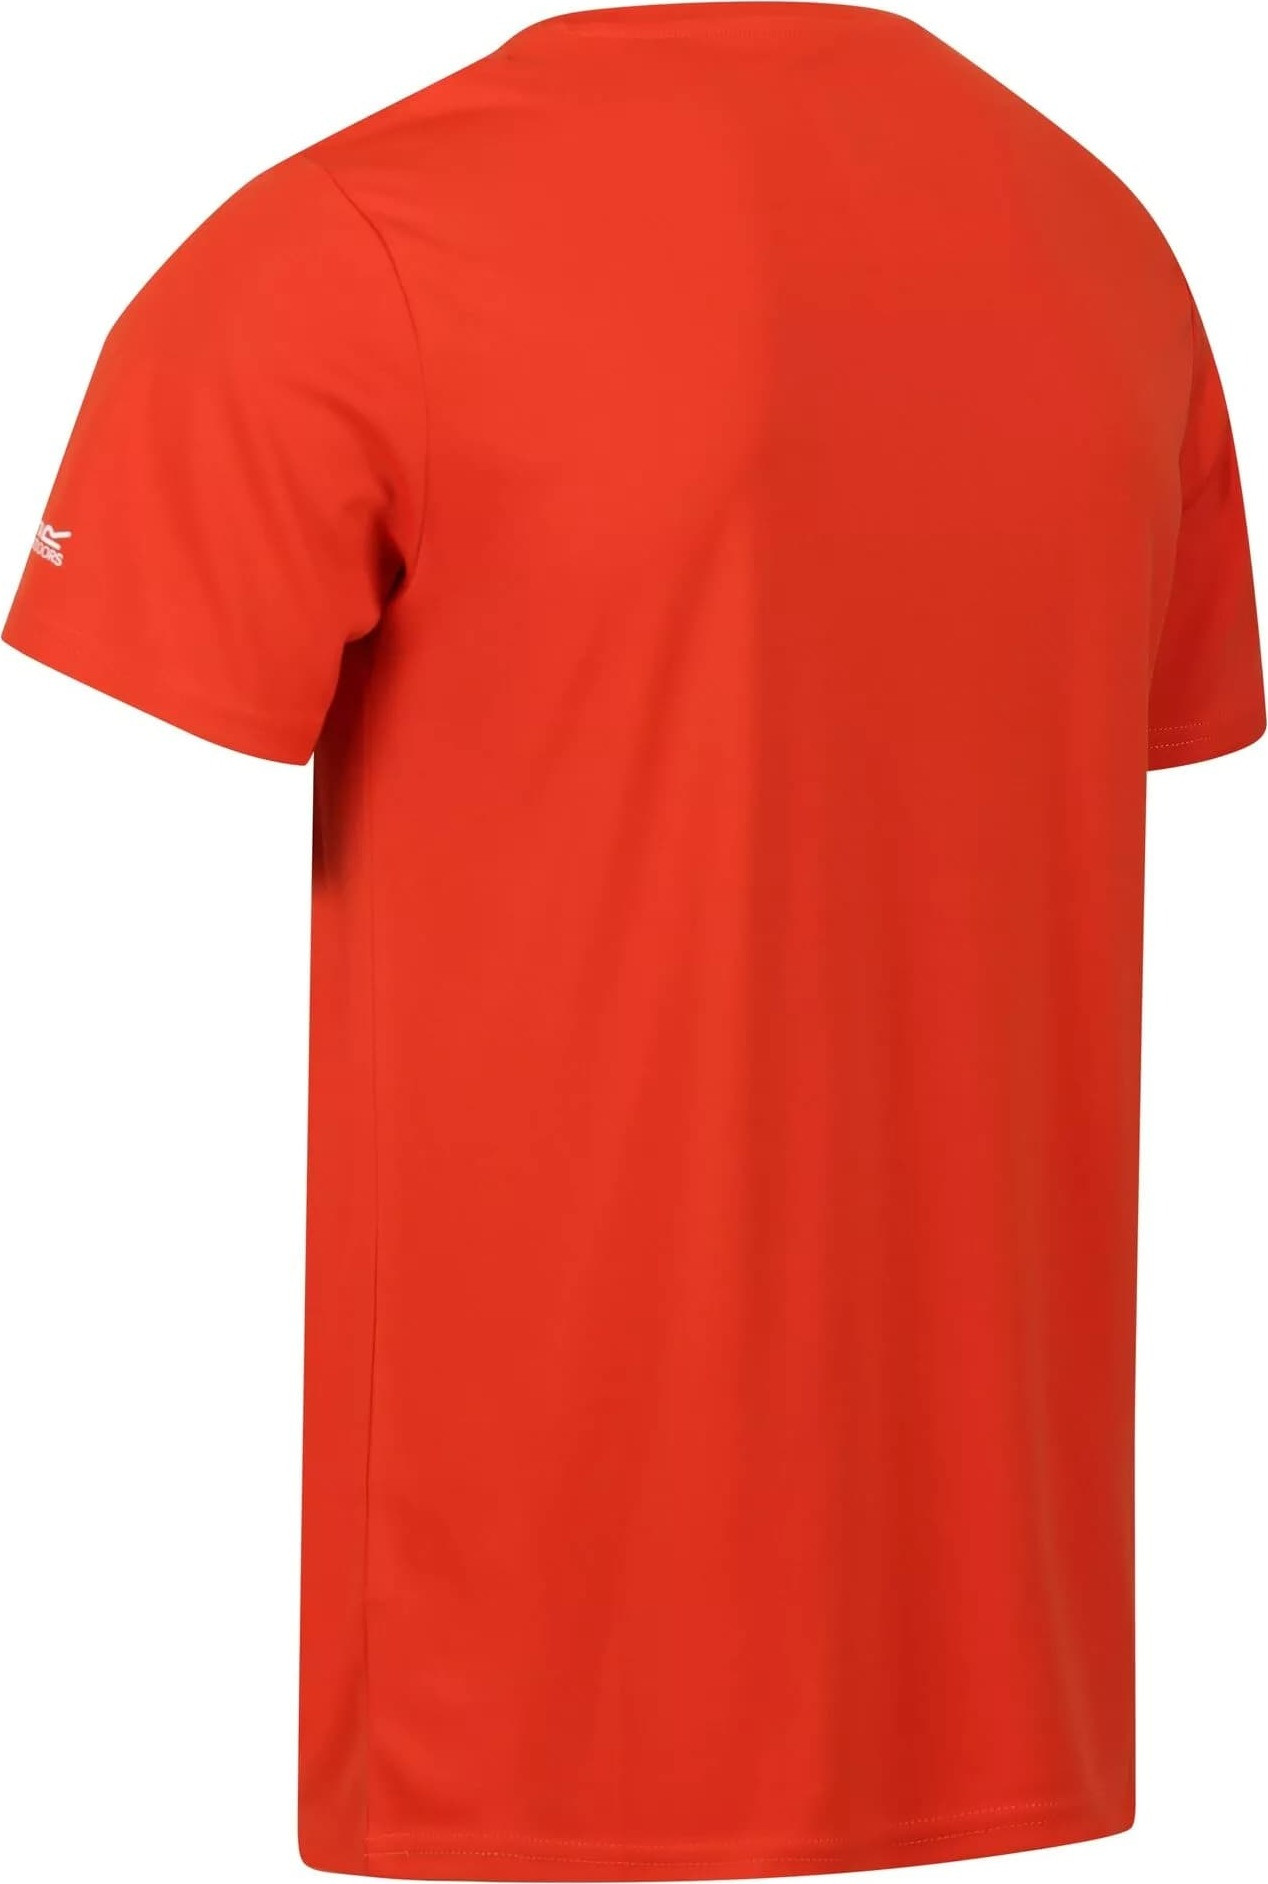 Pánské tričko Regatta Fingal VII RMT272-33L oranžové L